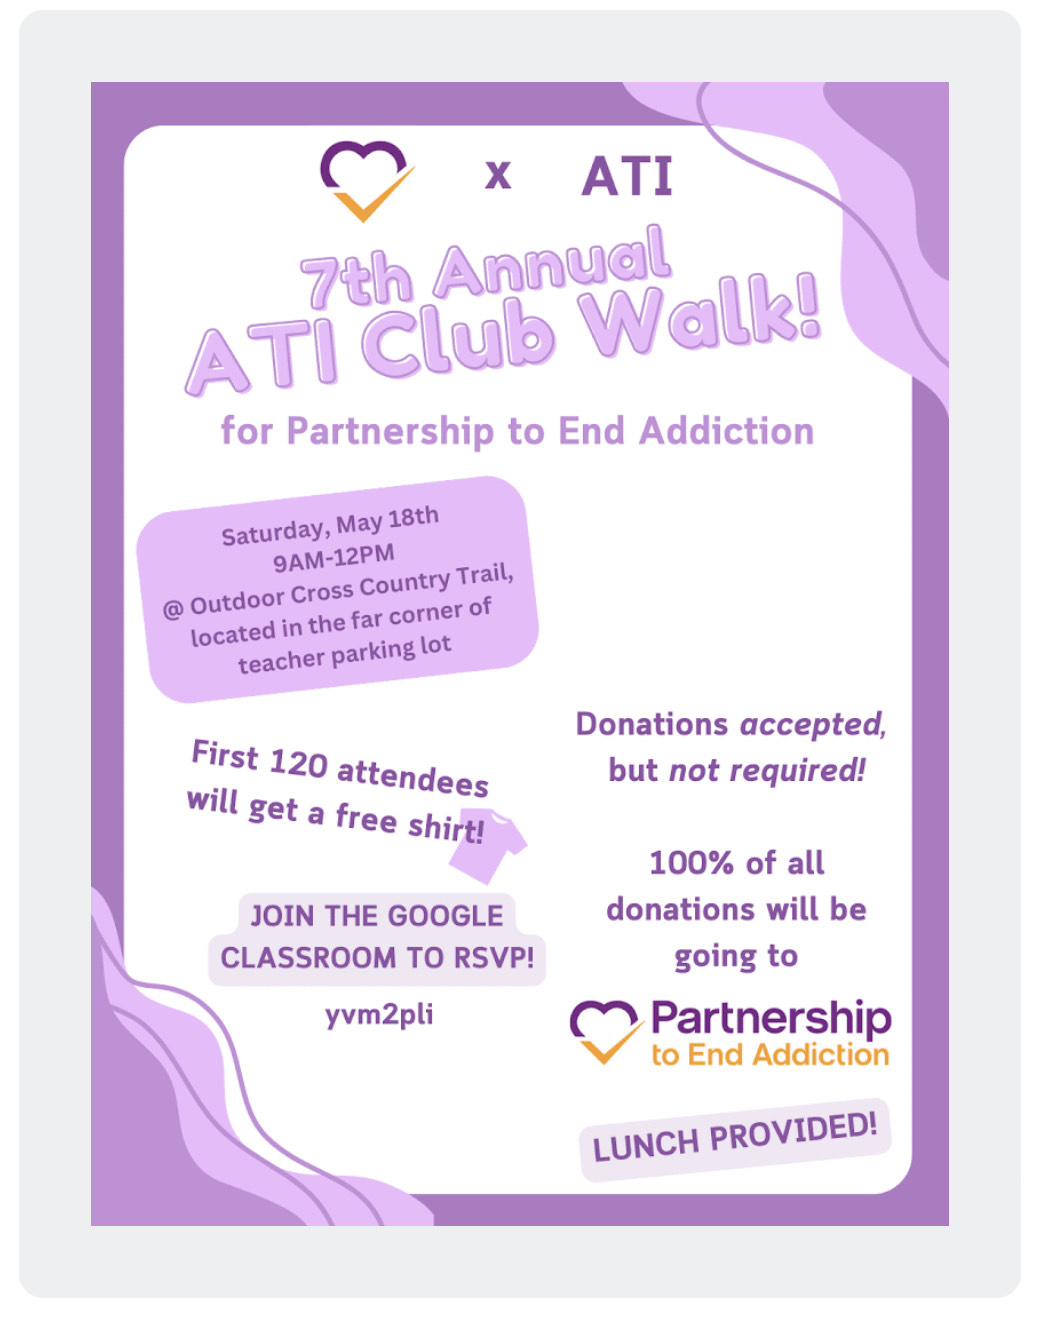 7th Annual ATI Club Walk